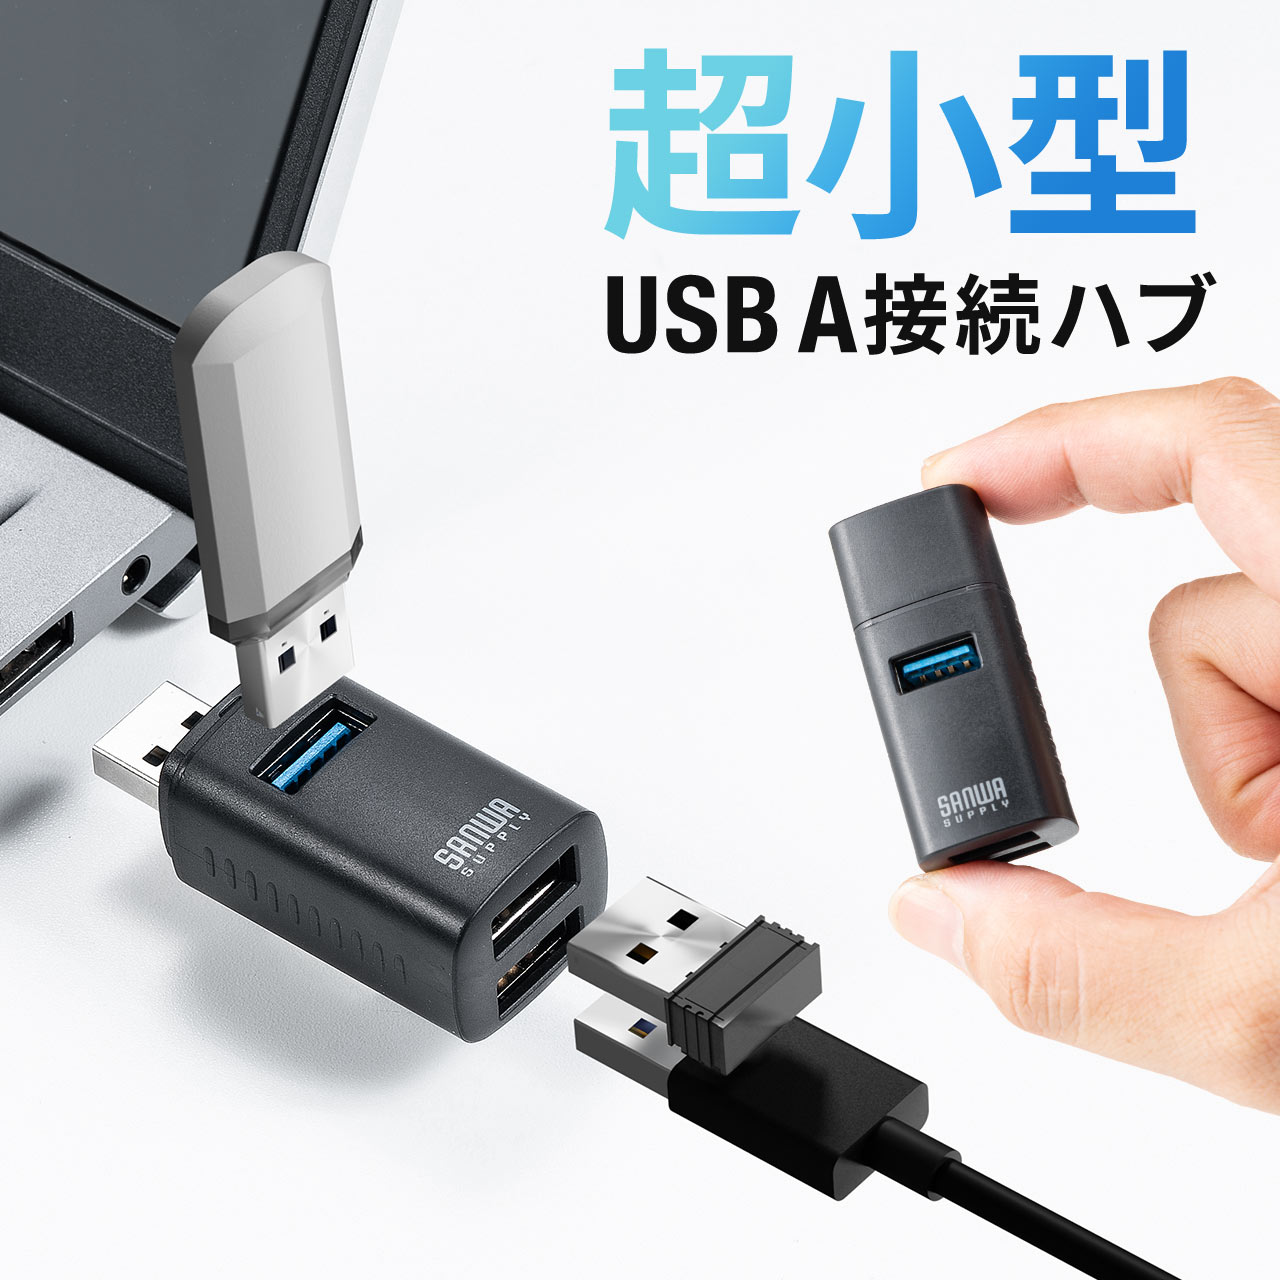 Amazon.co.jp: SanDisk サンディスク USBメモリー 64GB USB3.0対応 超高速 [並行輸入品] : パソコン・周辺機器